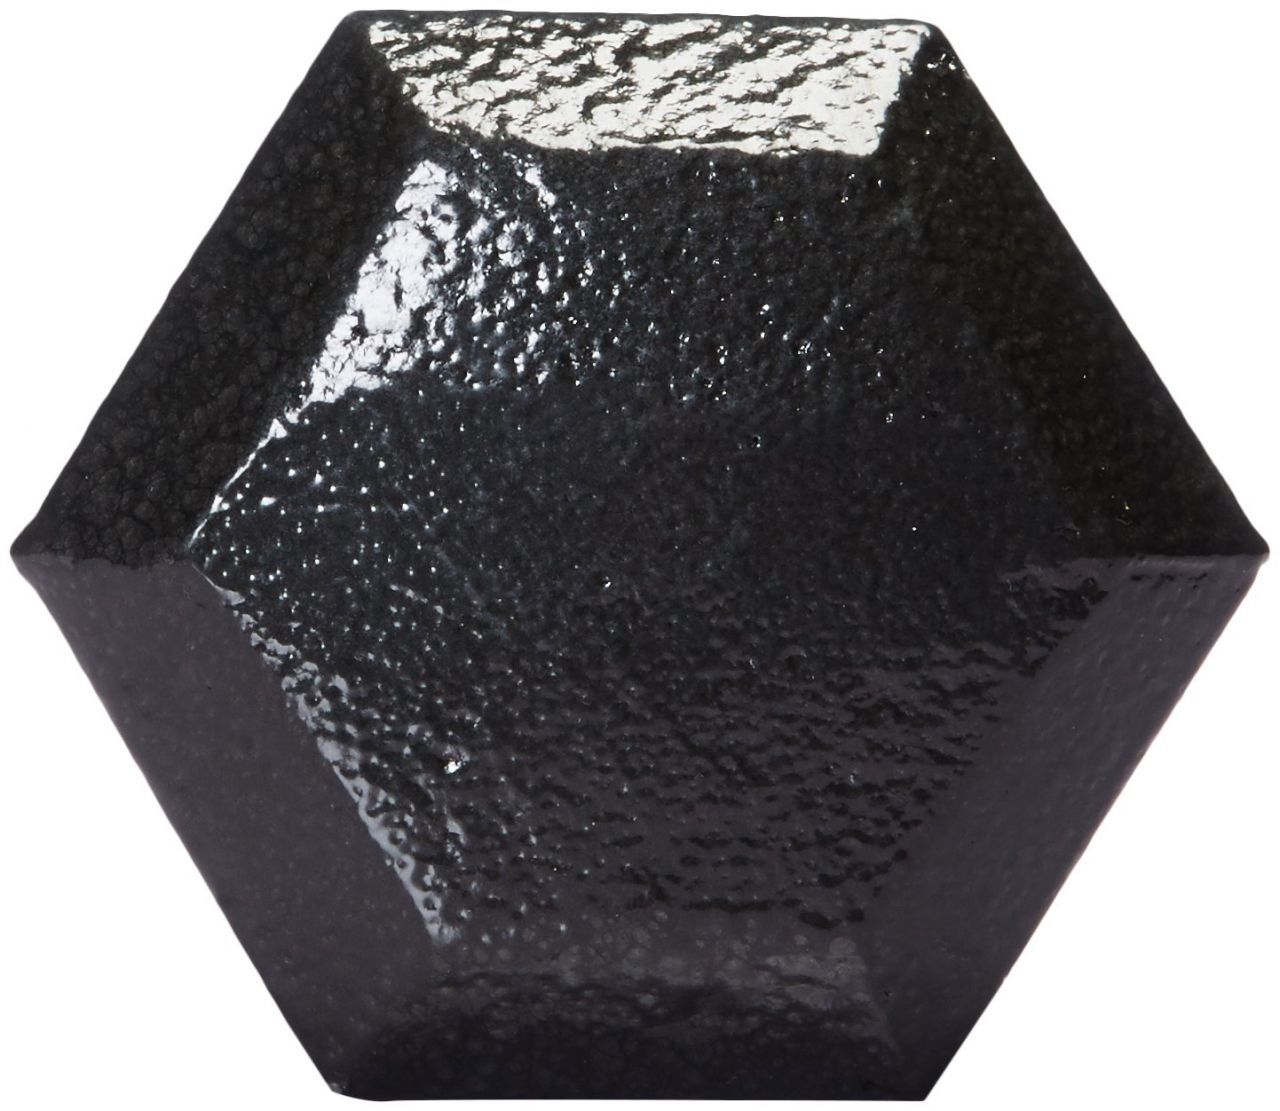 AmazonBasics Cast Iron Hexagon Dumbbell, 6.8 Kgs (15 pounds)